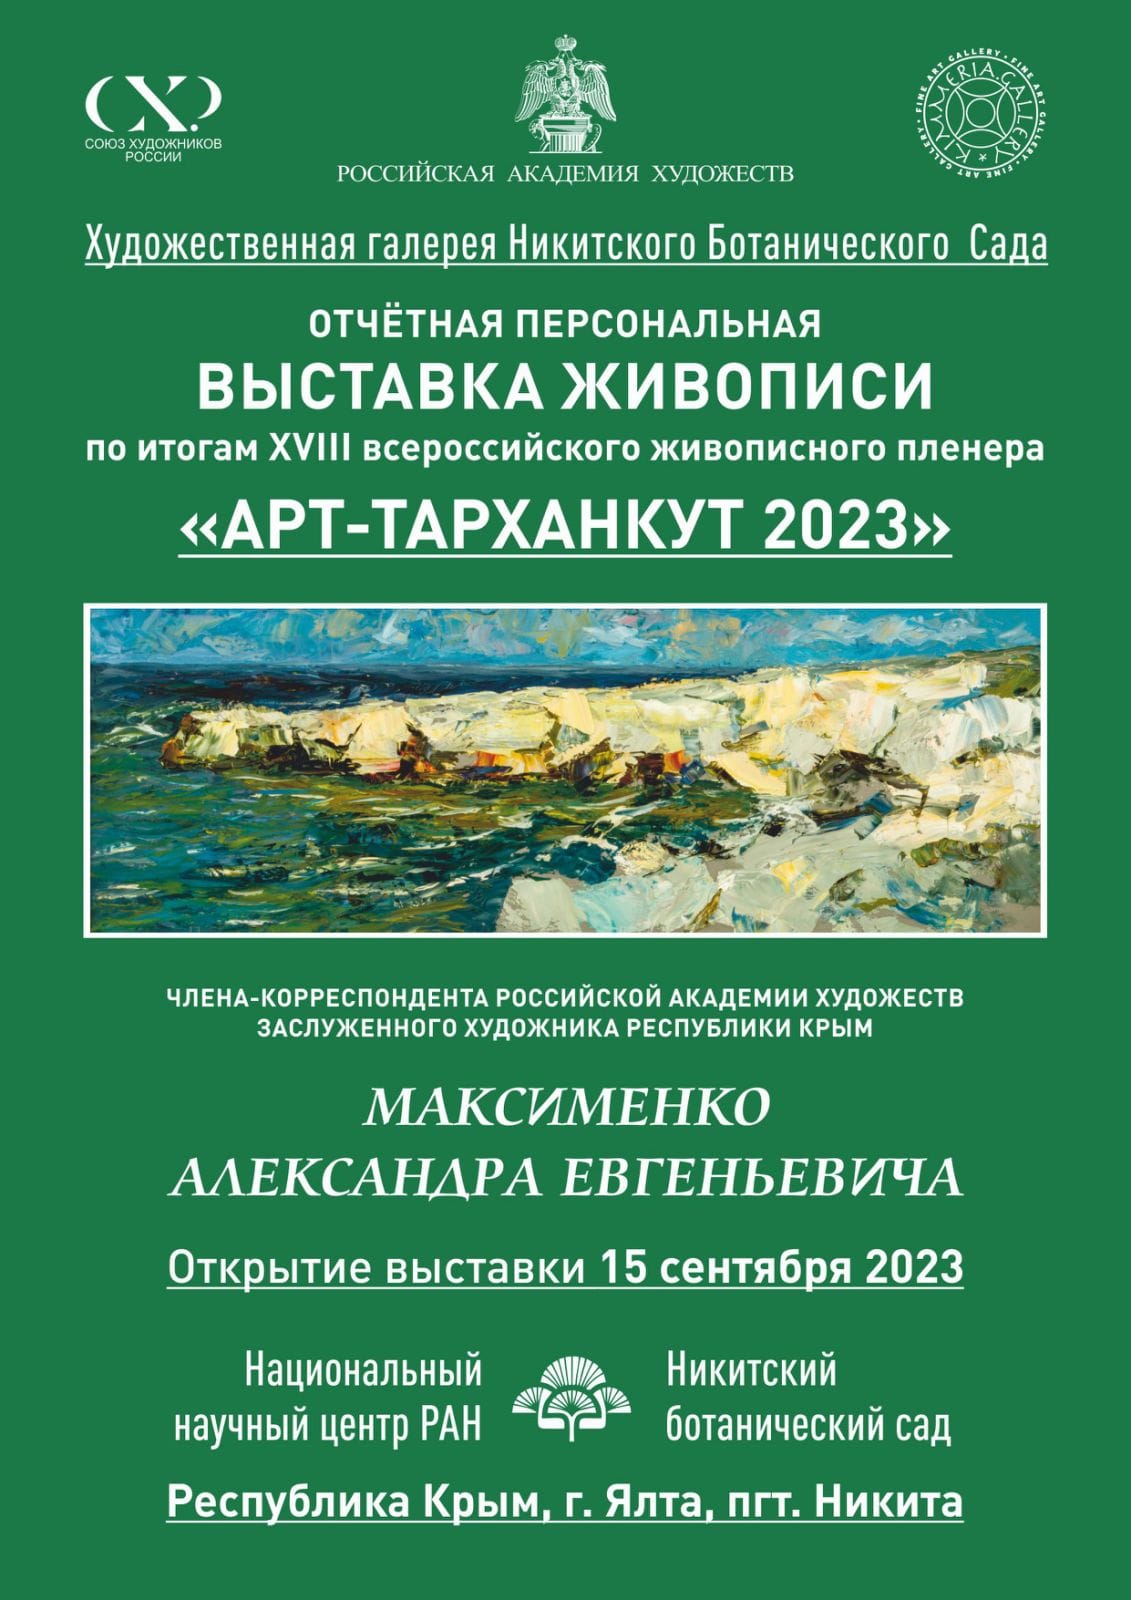 Афиша открытия выставки Арт-Тарханкут 2023